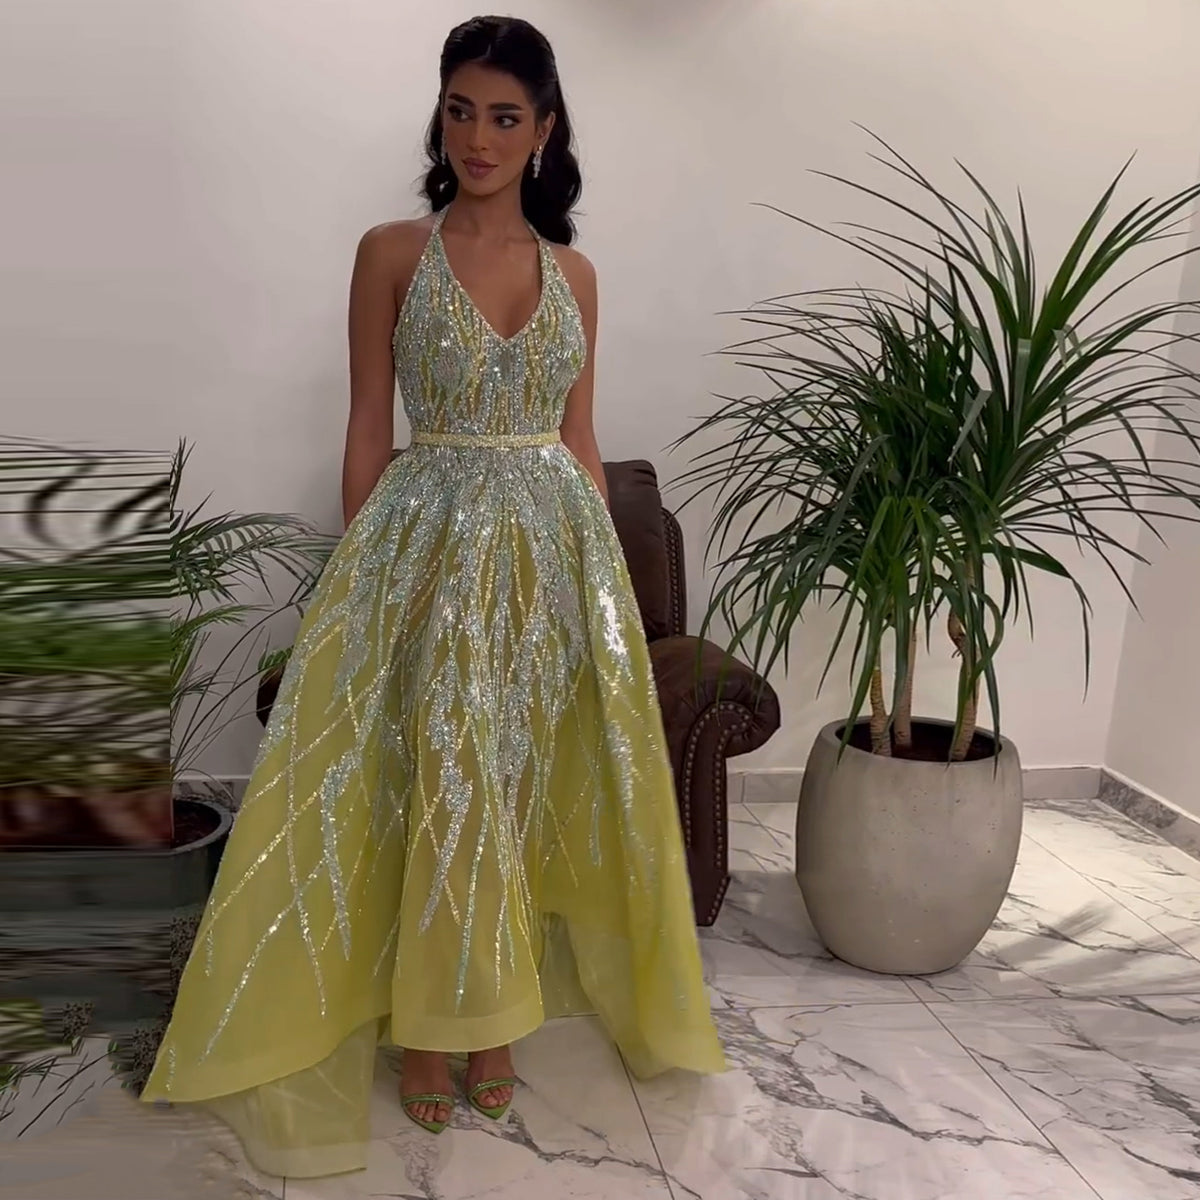 Sharon Said Luxurious Beaded Lemon Green Arabic Evening Dresses with Halter High Low Dubai Women Wedding Party Gowns SS472